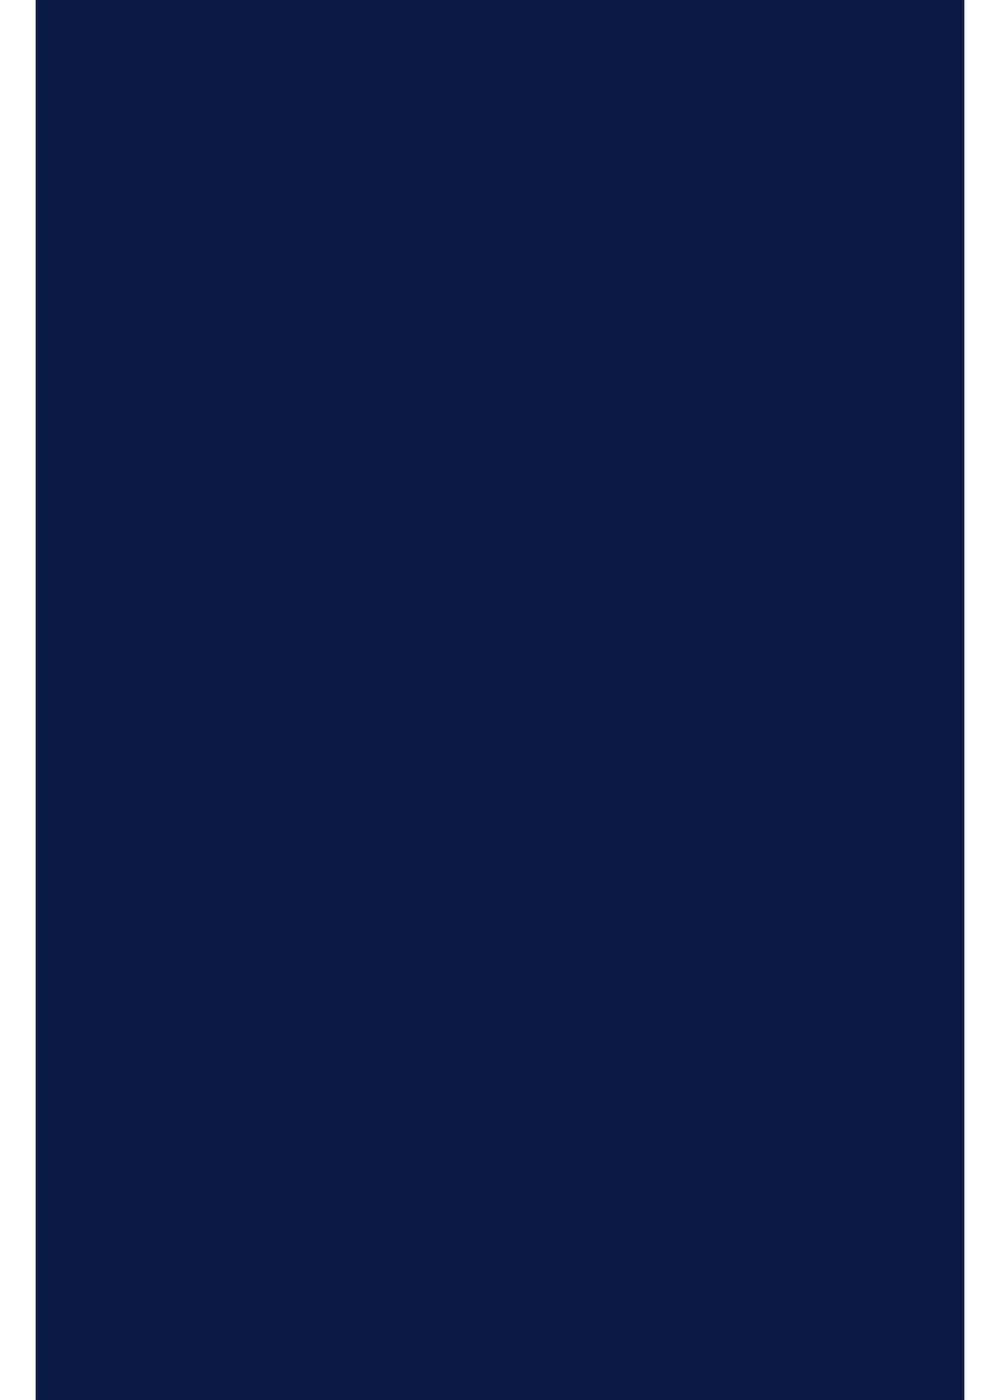 Hilltop Transparentpapier A4 Transferfolie/Textilfolie zum Aufbügeln - perfekt zum Plottern Navy Blau